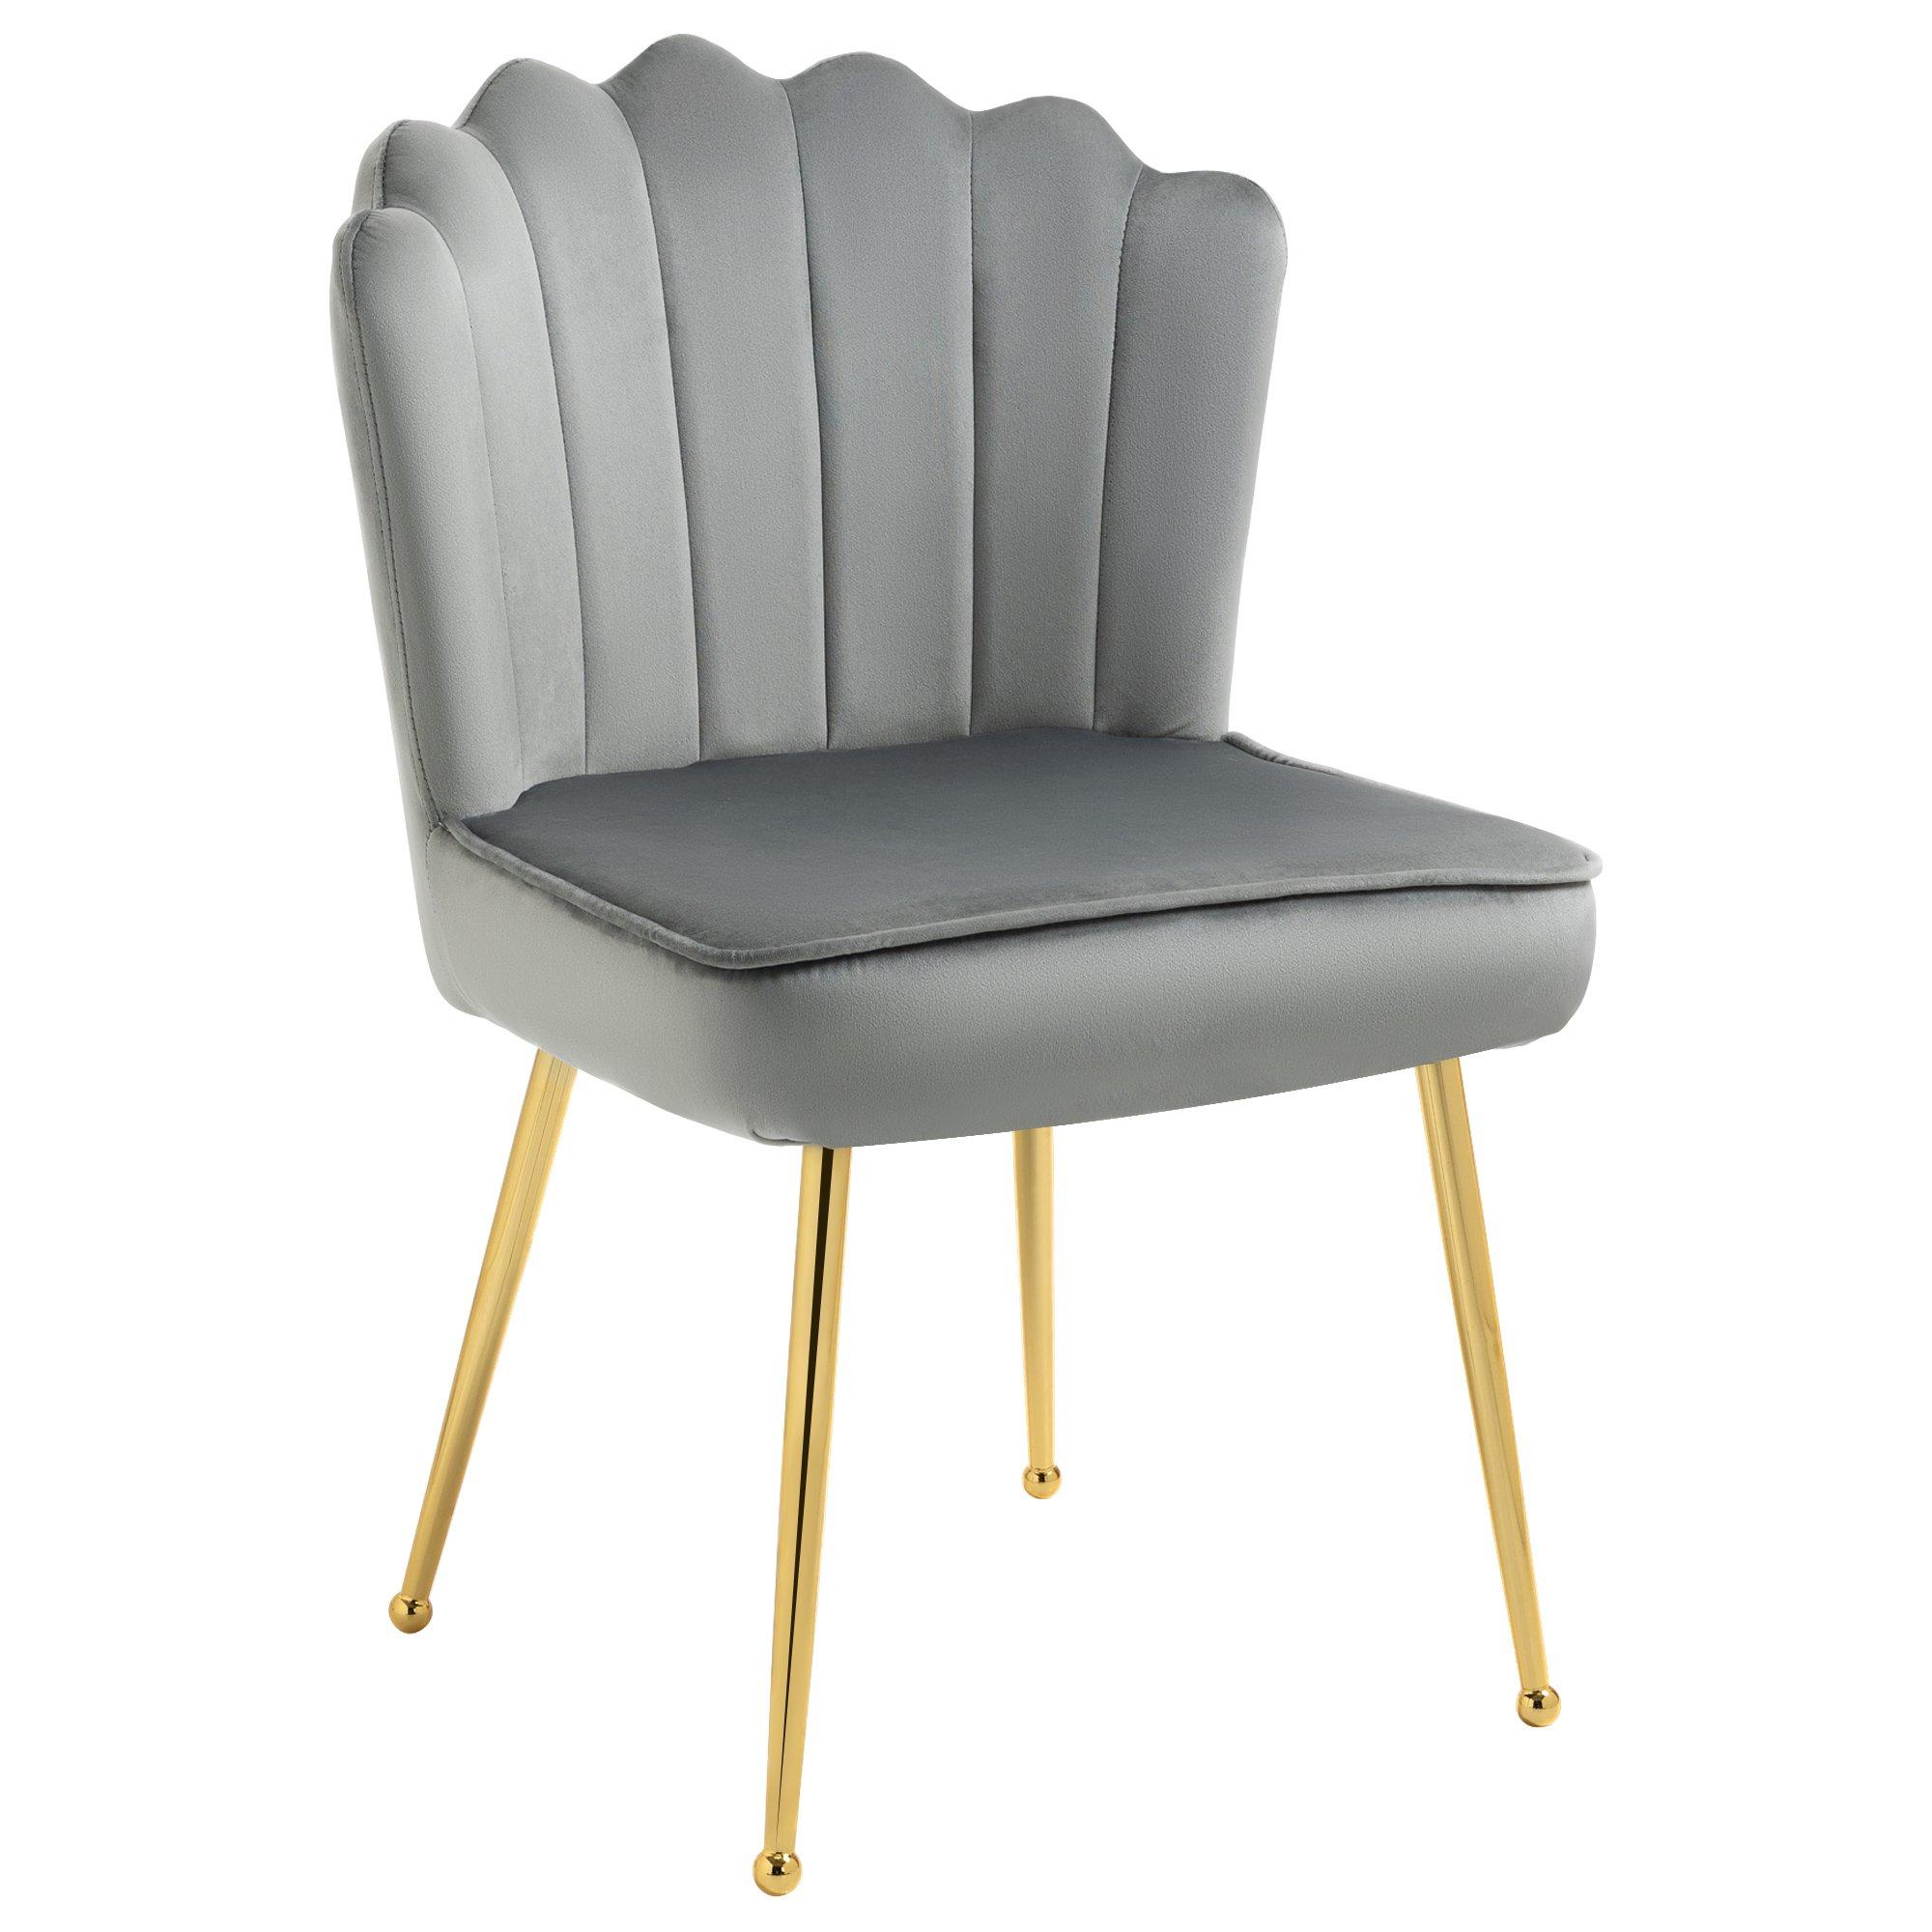 Velvet-Feel Shell Luxe Accent Chair Home Bedroom Lounge